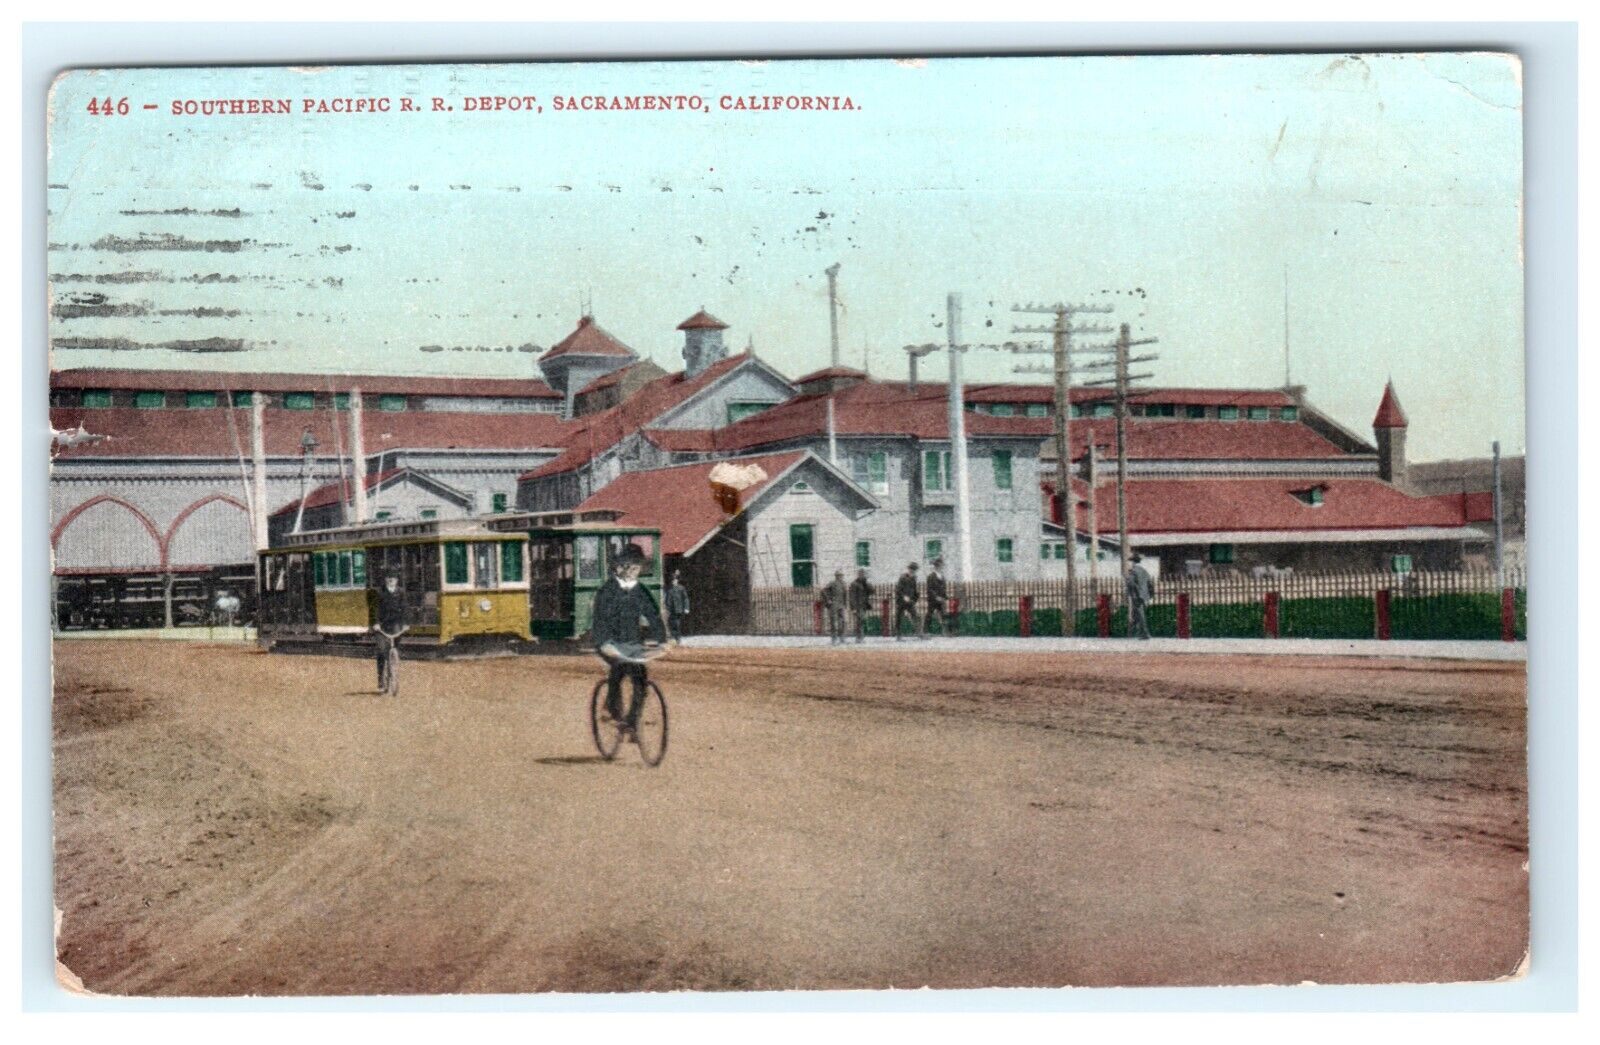 1907 Southern Pacific Railroad Depot Sacramento CA, California Early Postcard